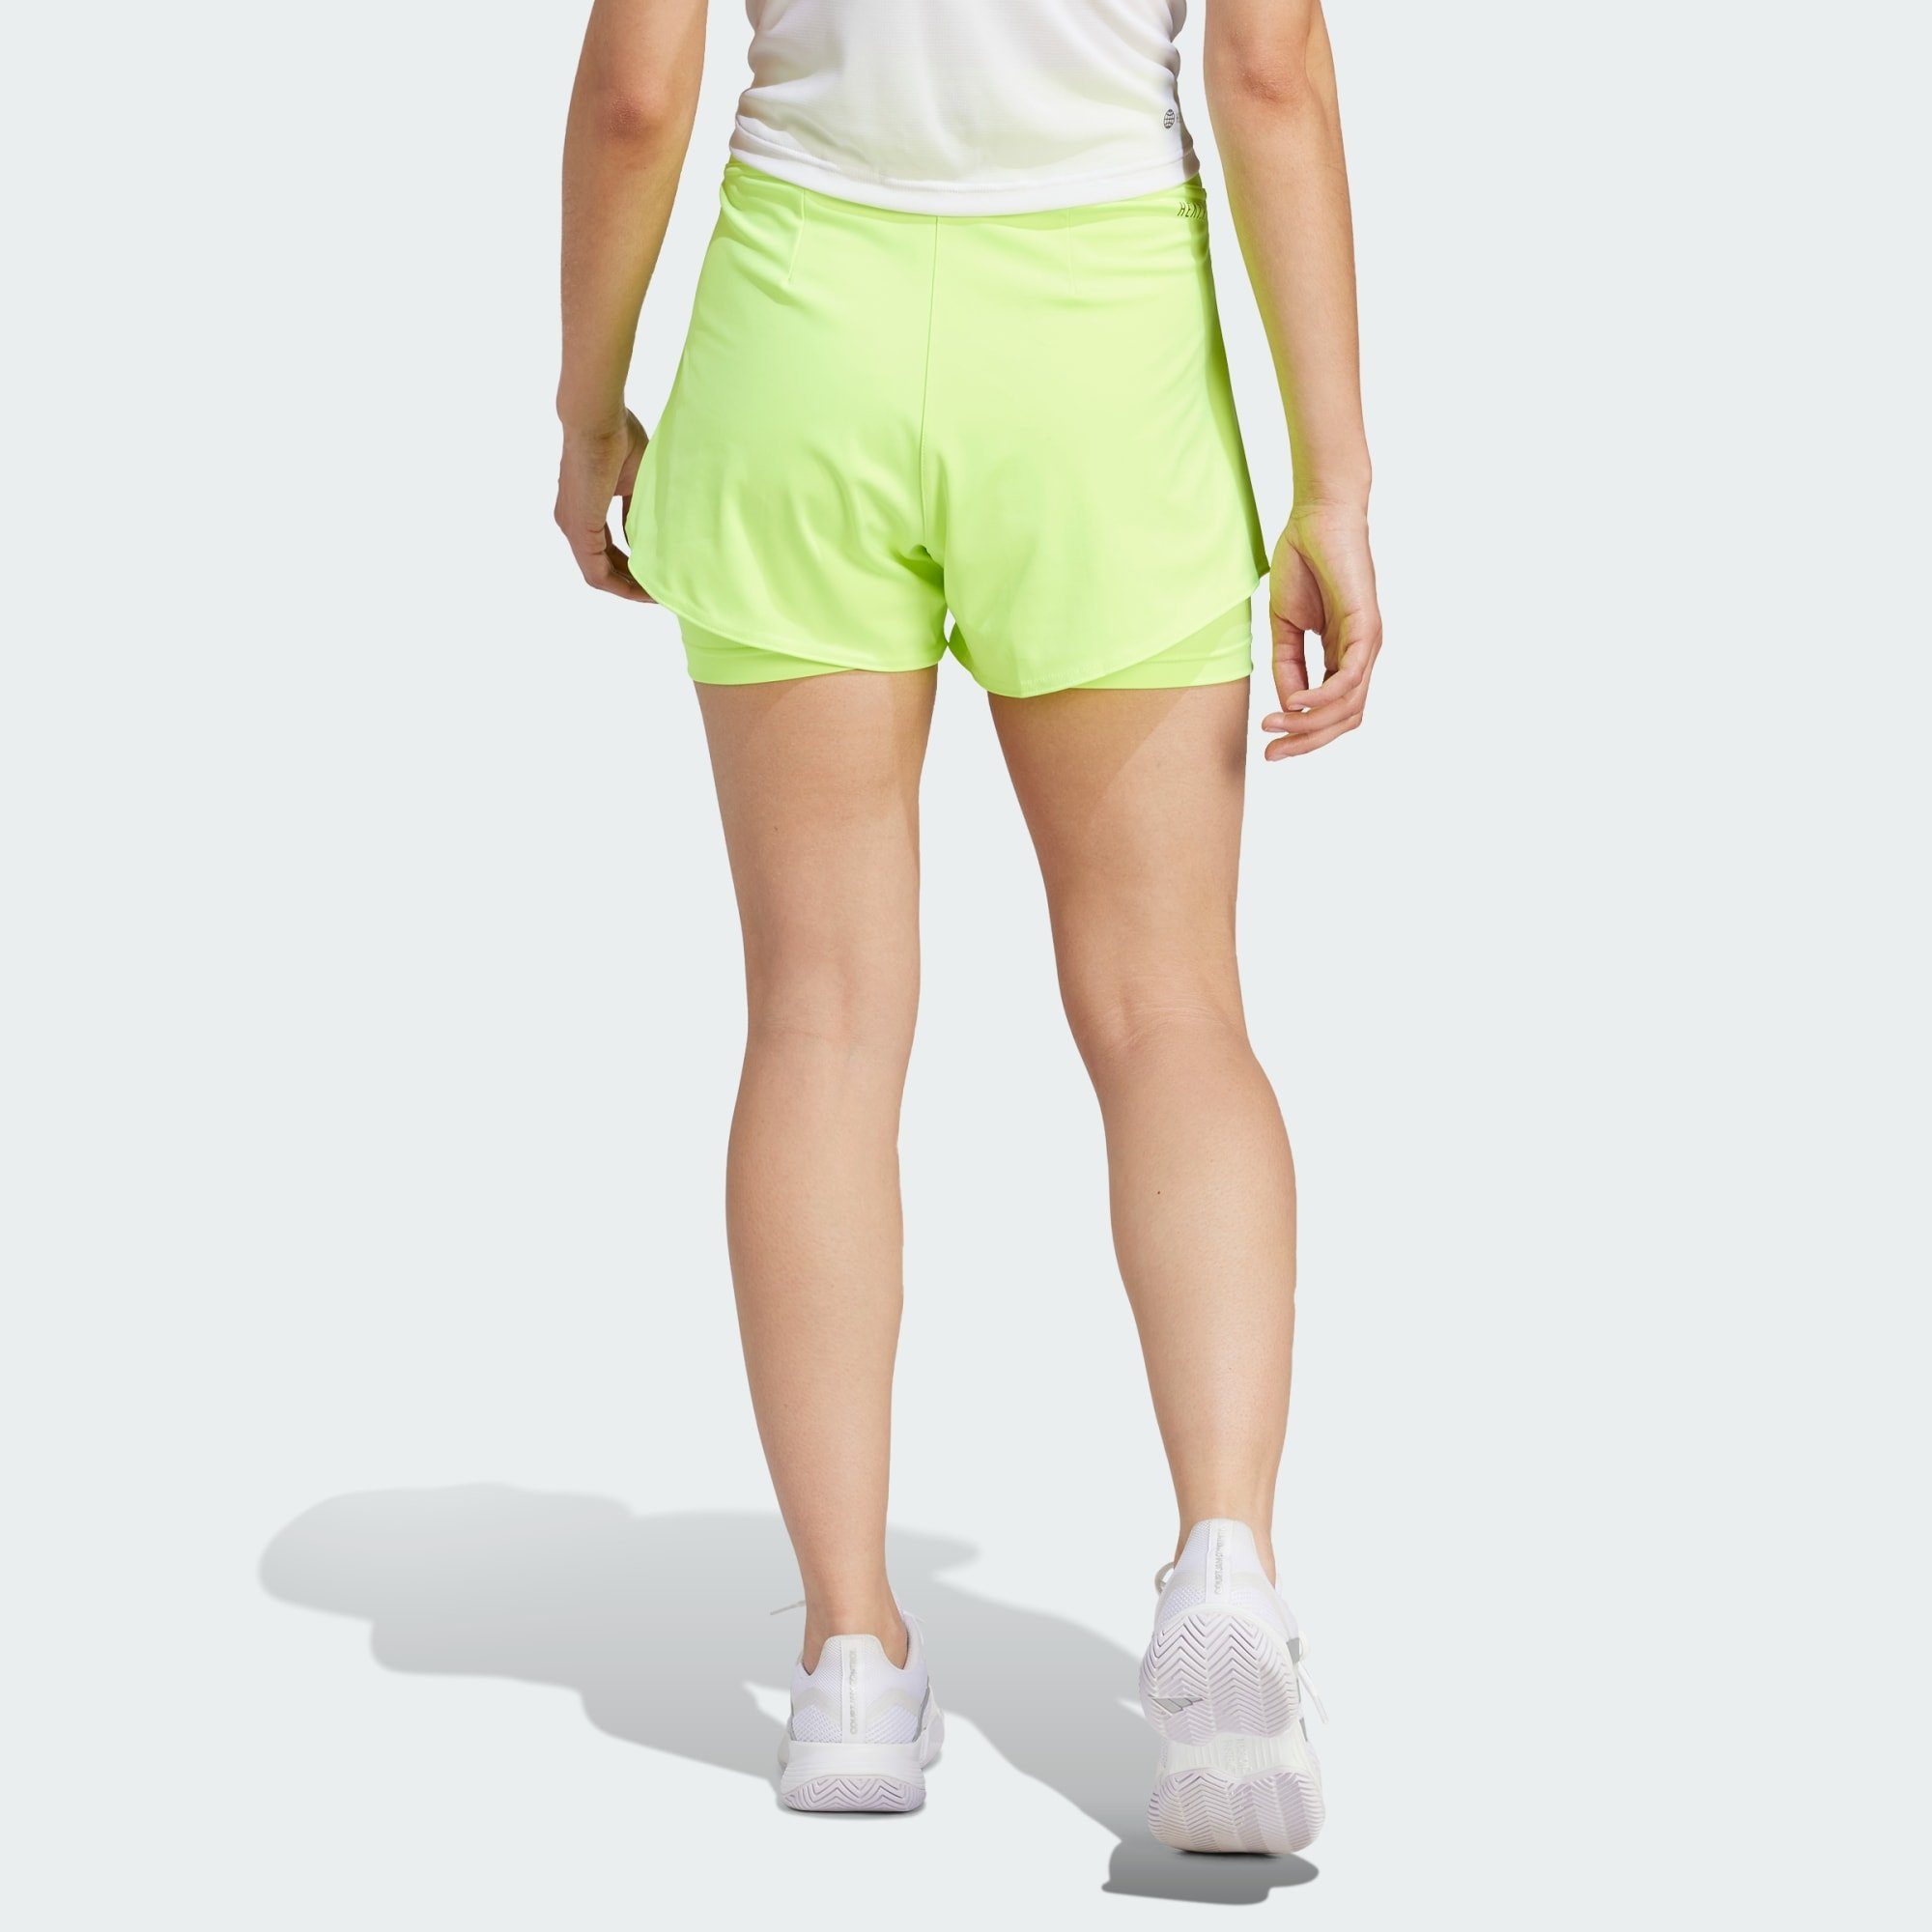 TENNIS Performance MATCH Lemon SHORTS Lucid adidas 2-in-1-Shorts